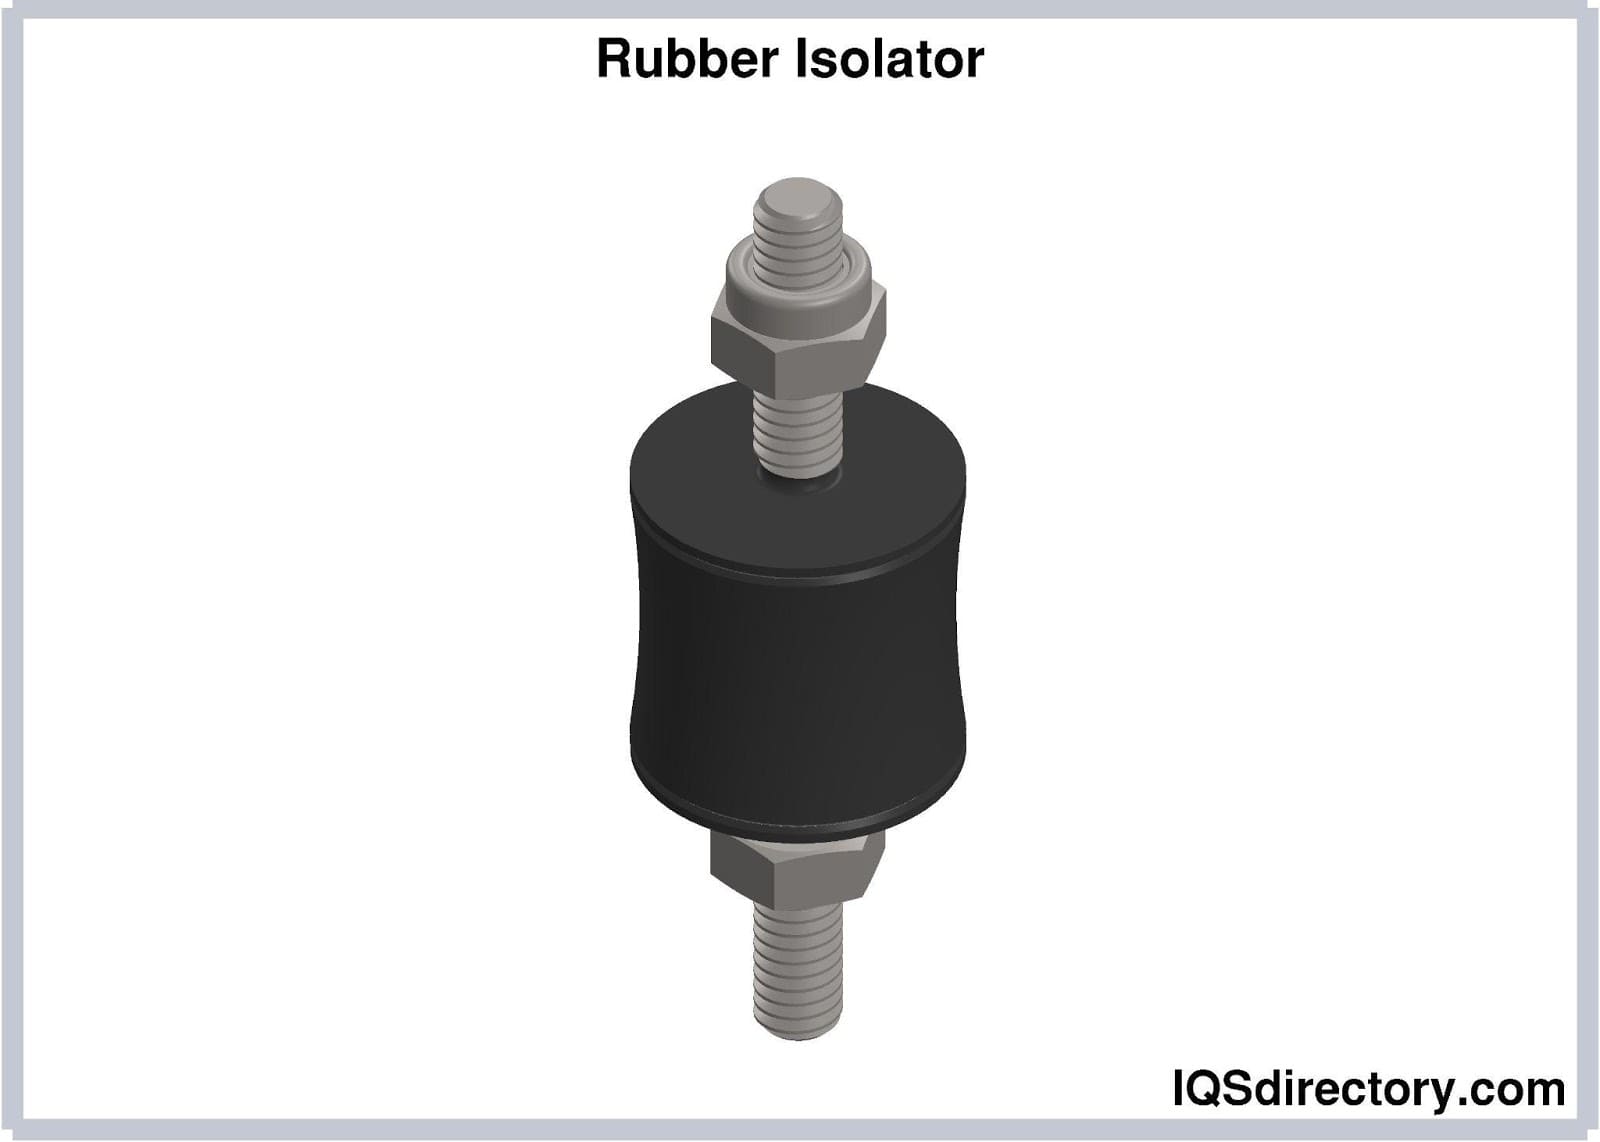 Rubber Isolators